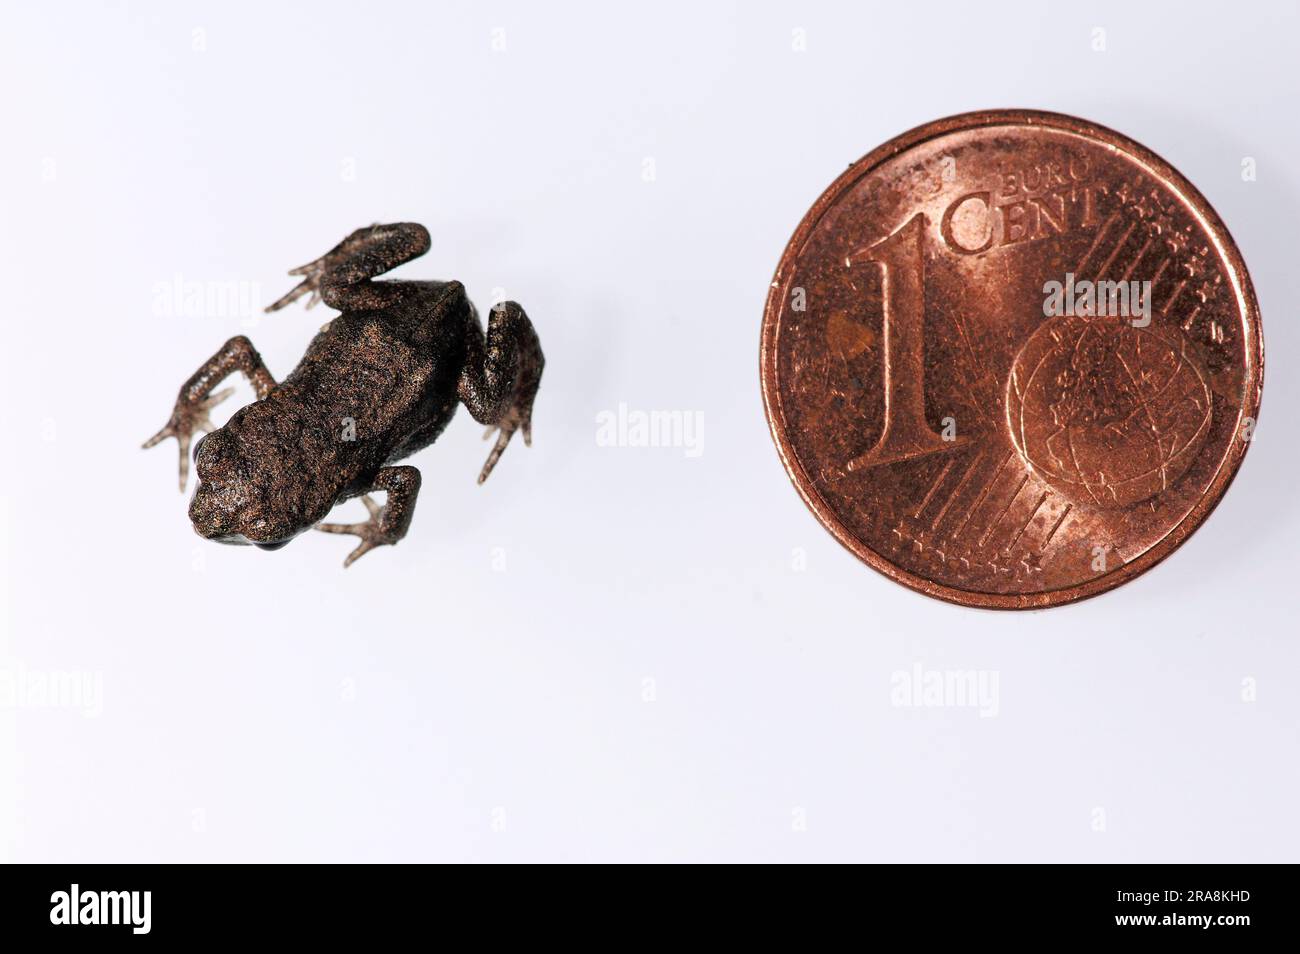 Common toad (Bufo bufo), juvenile and 1-cent piece, comparison Stock Photo